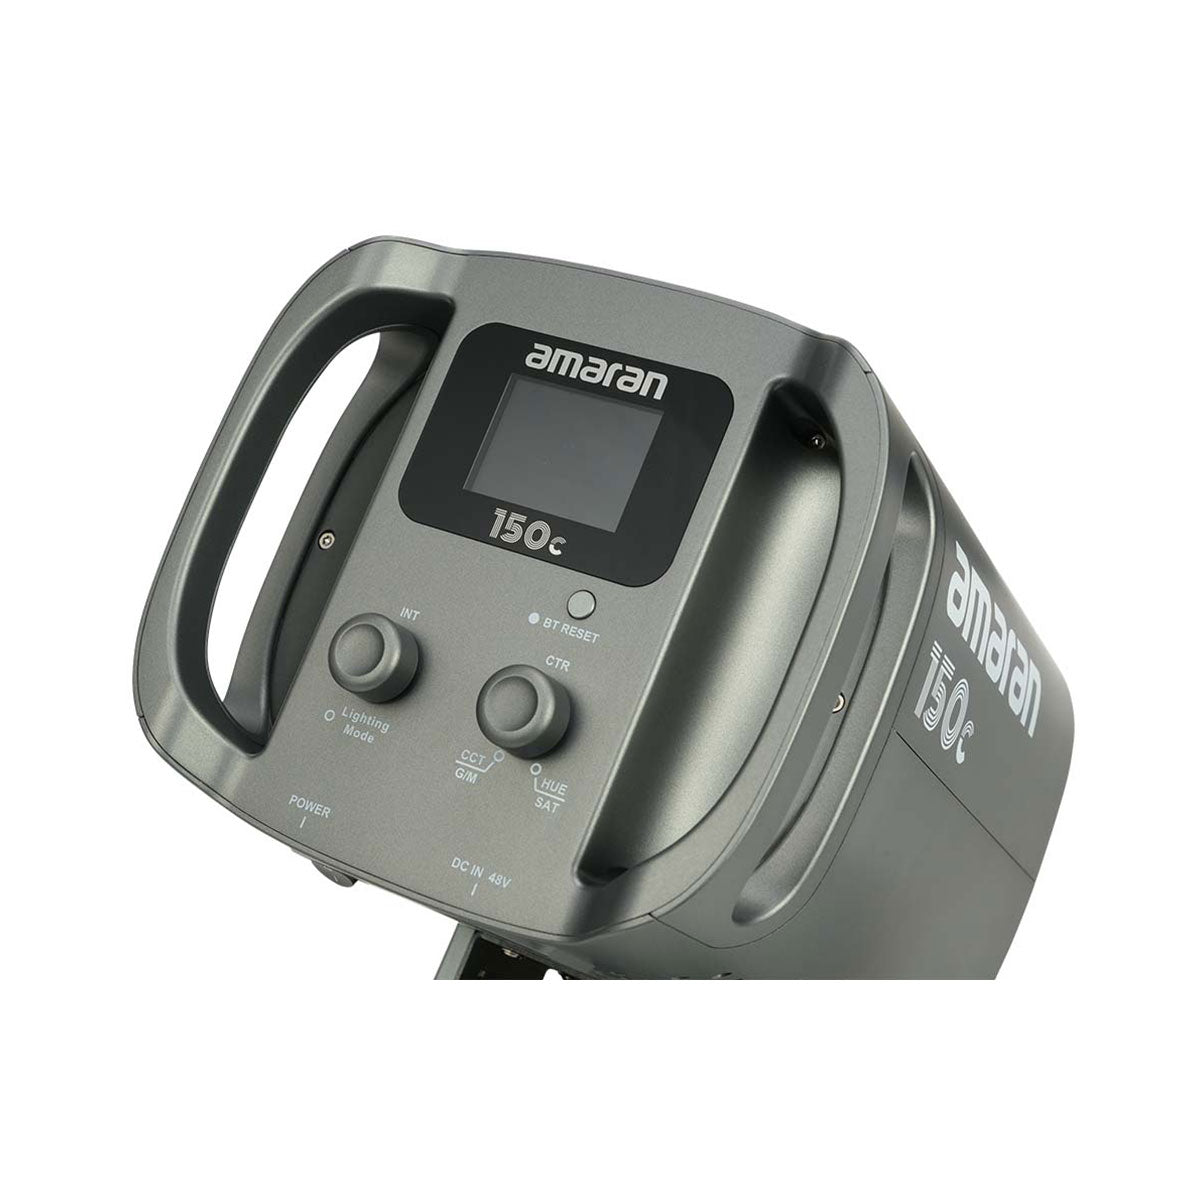 Amaran 150c RGB LED Light (Grey)